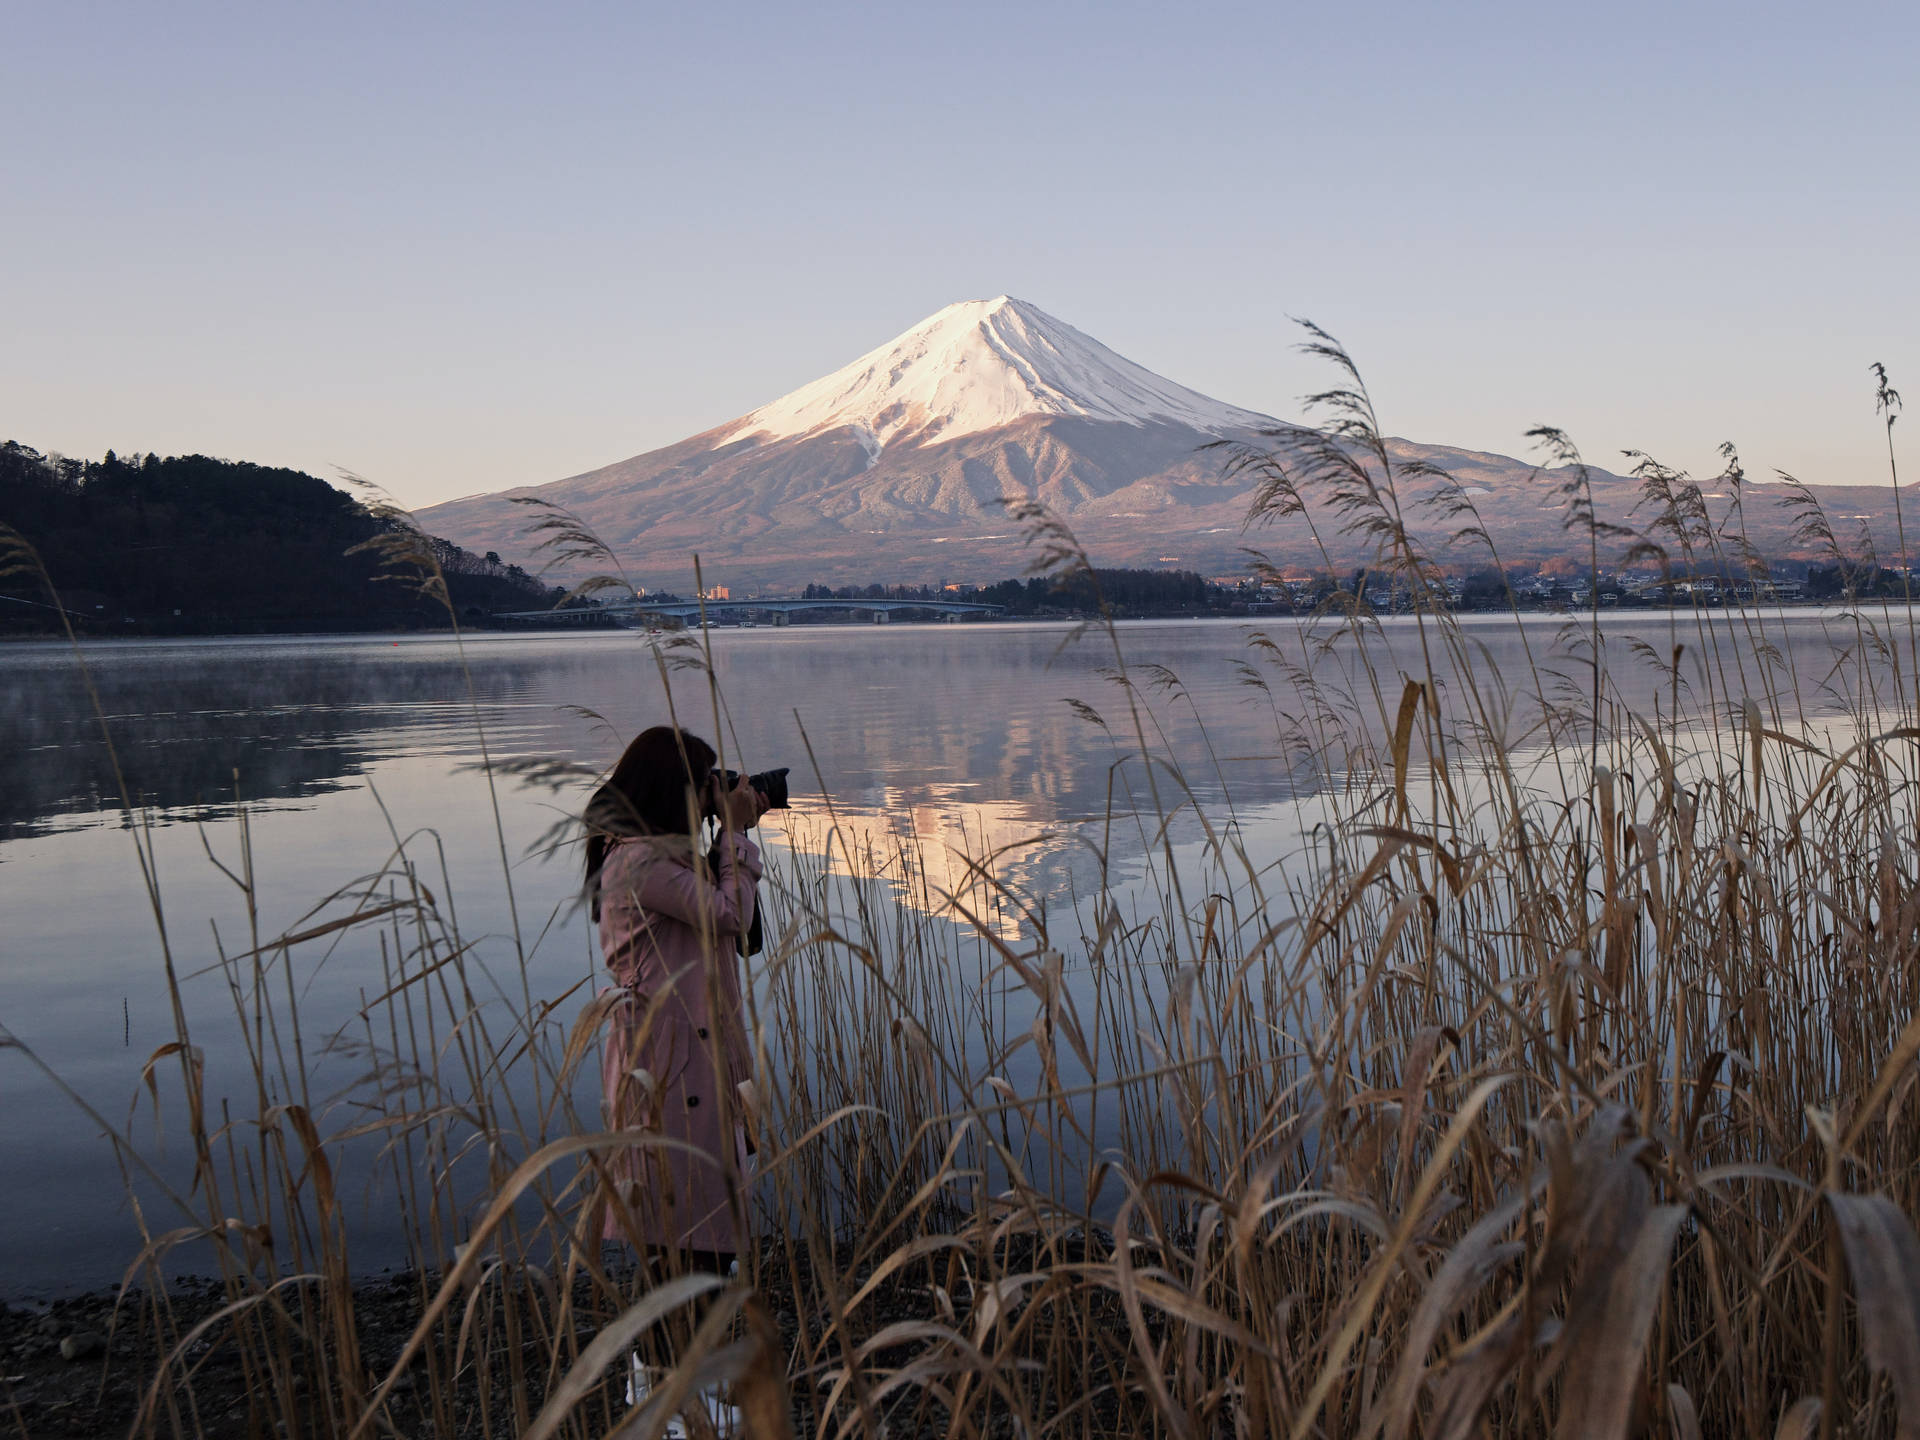 Photographer And Mount Fuji